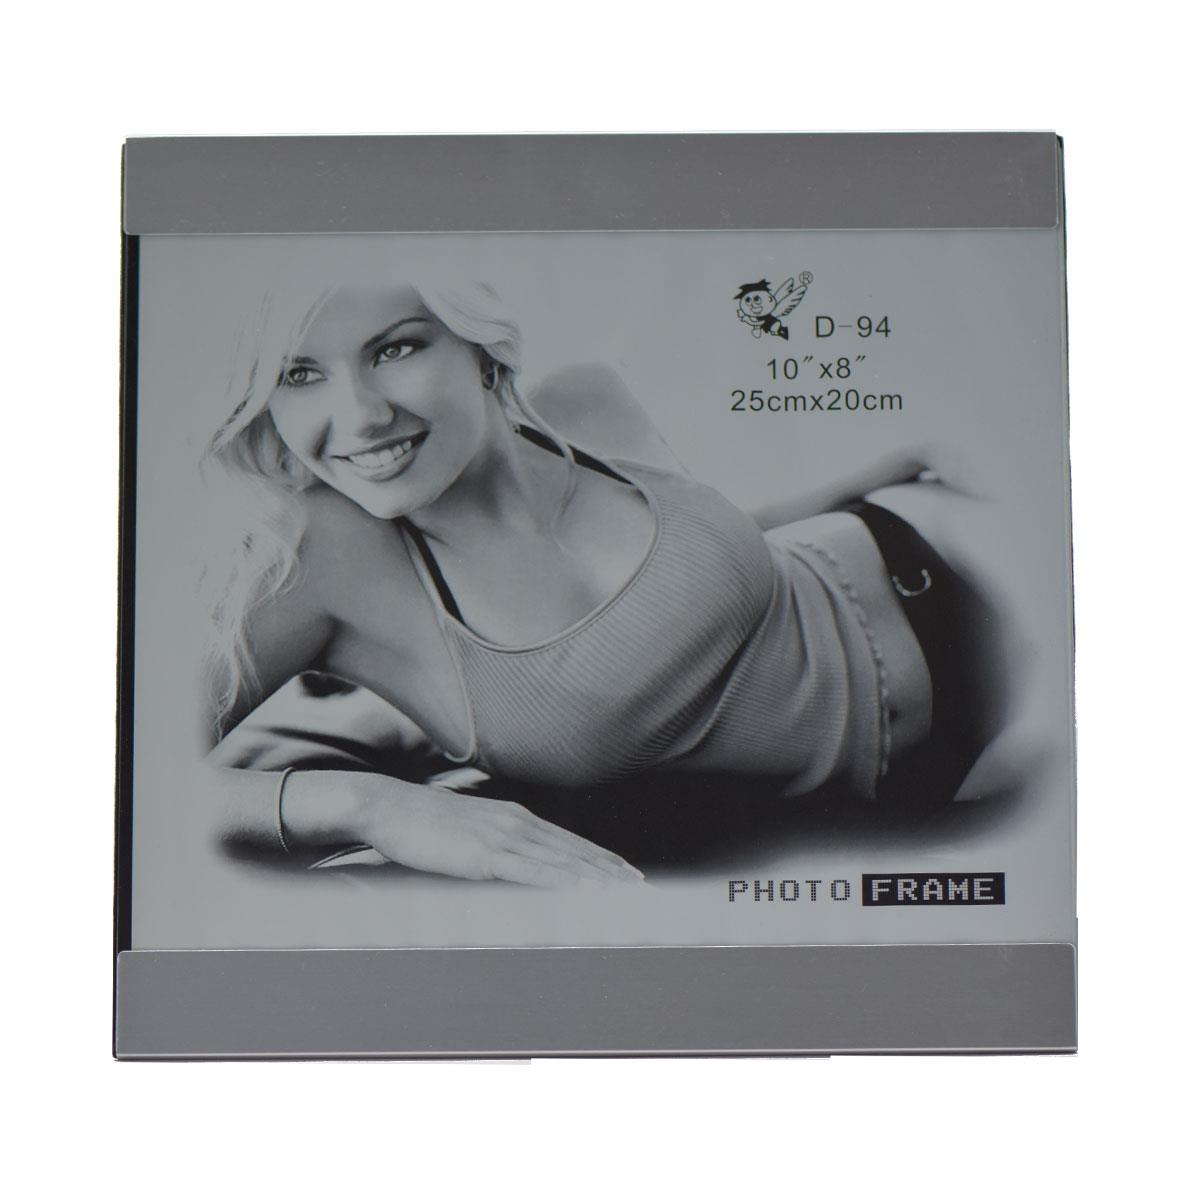 Acrylic Silver Border Photo Frame (10x8) inches (D-94)